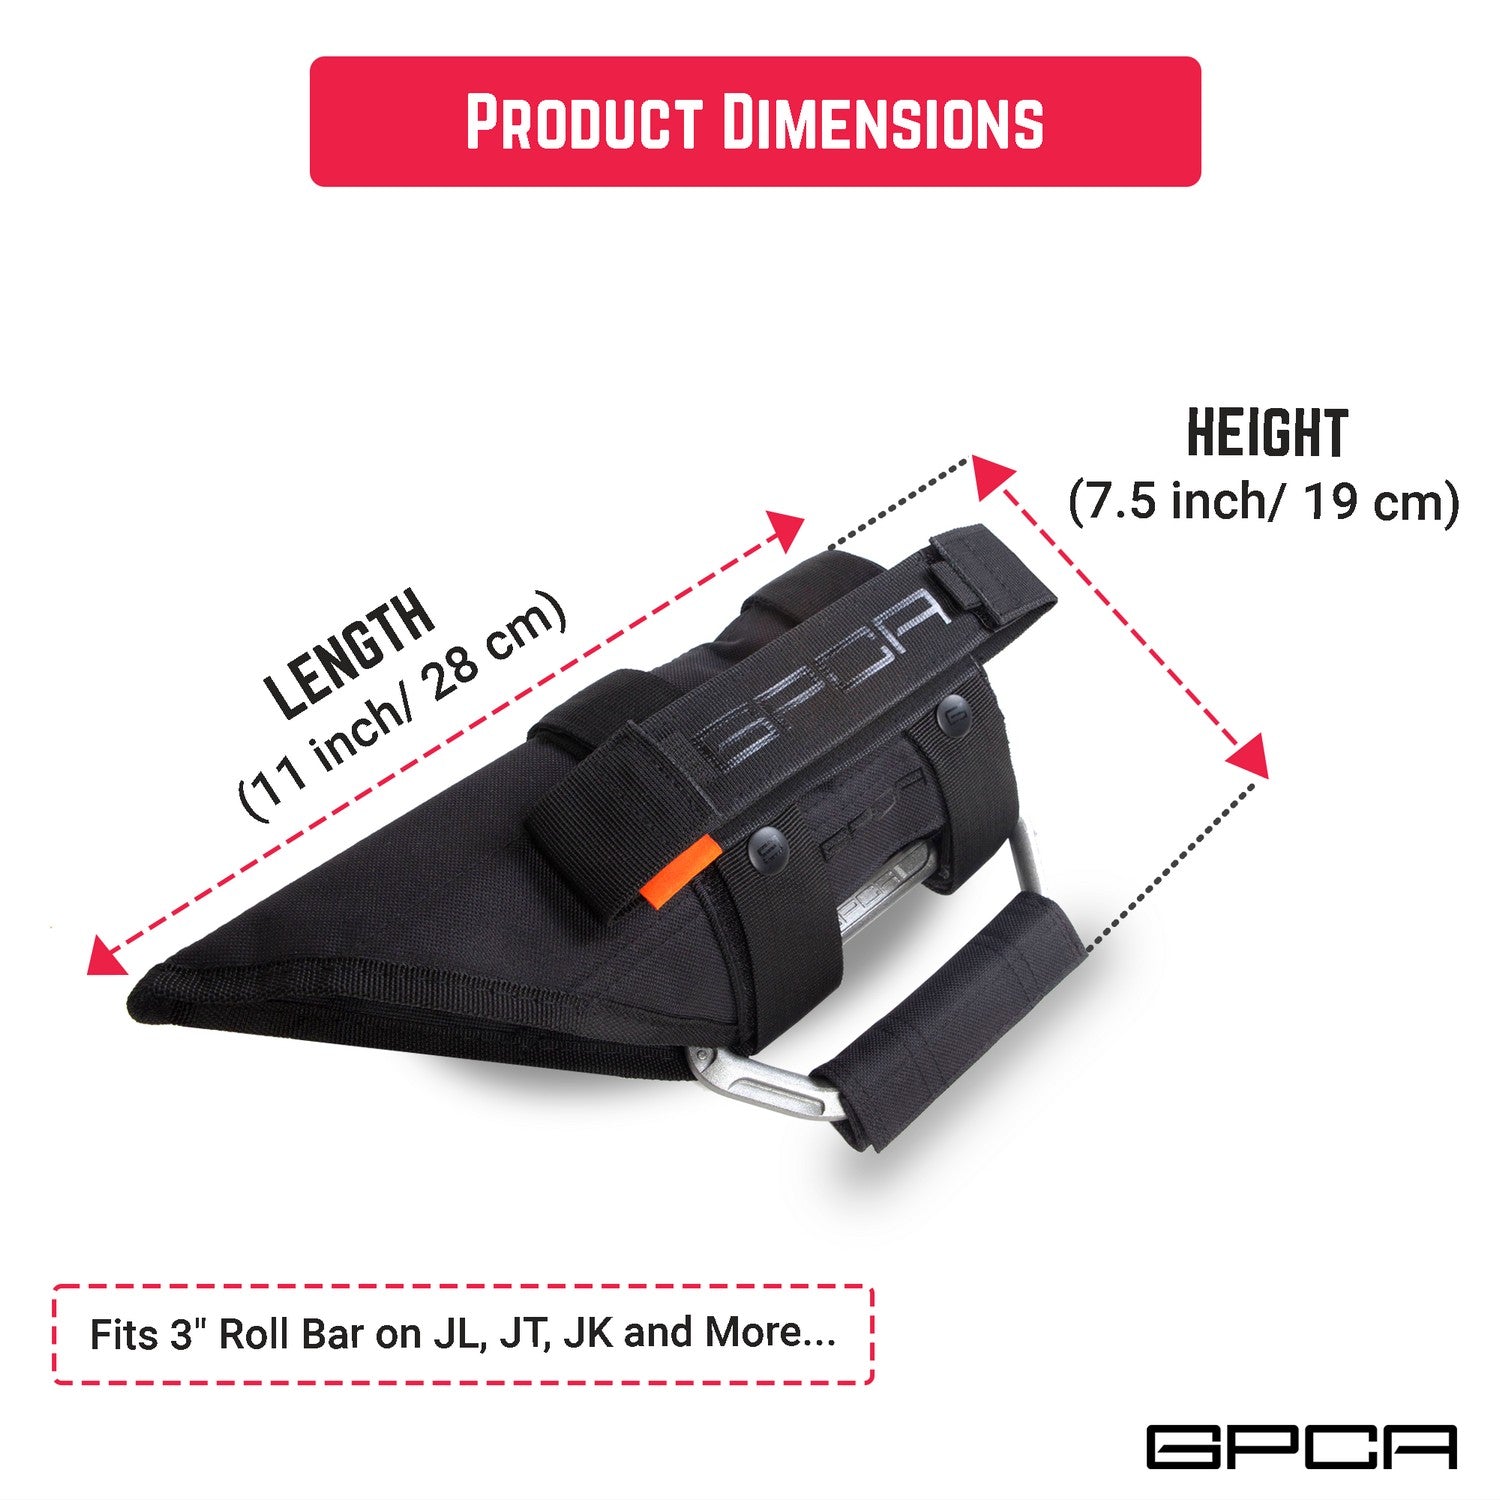 GPCA GP Grip PRO, fits 3" roll bar on JL, JT, JK and more.